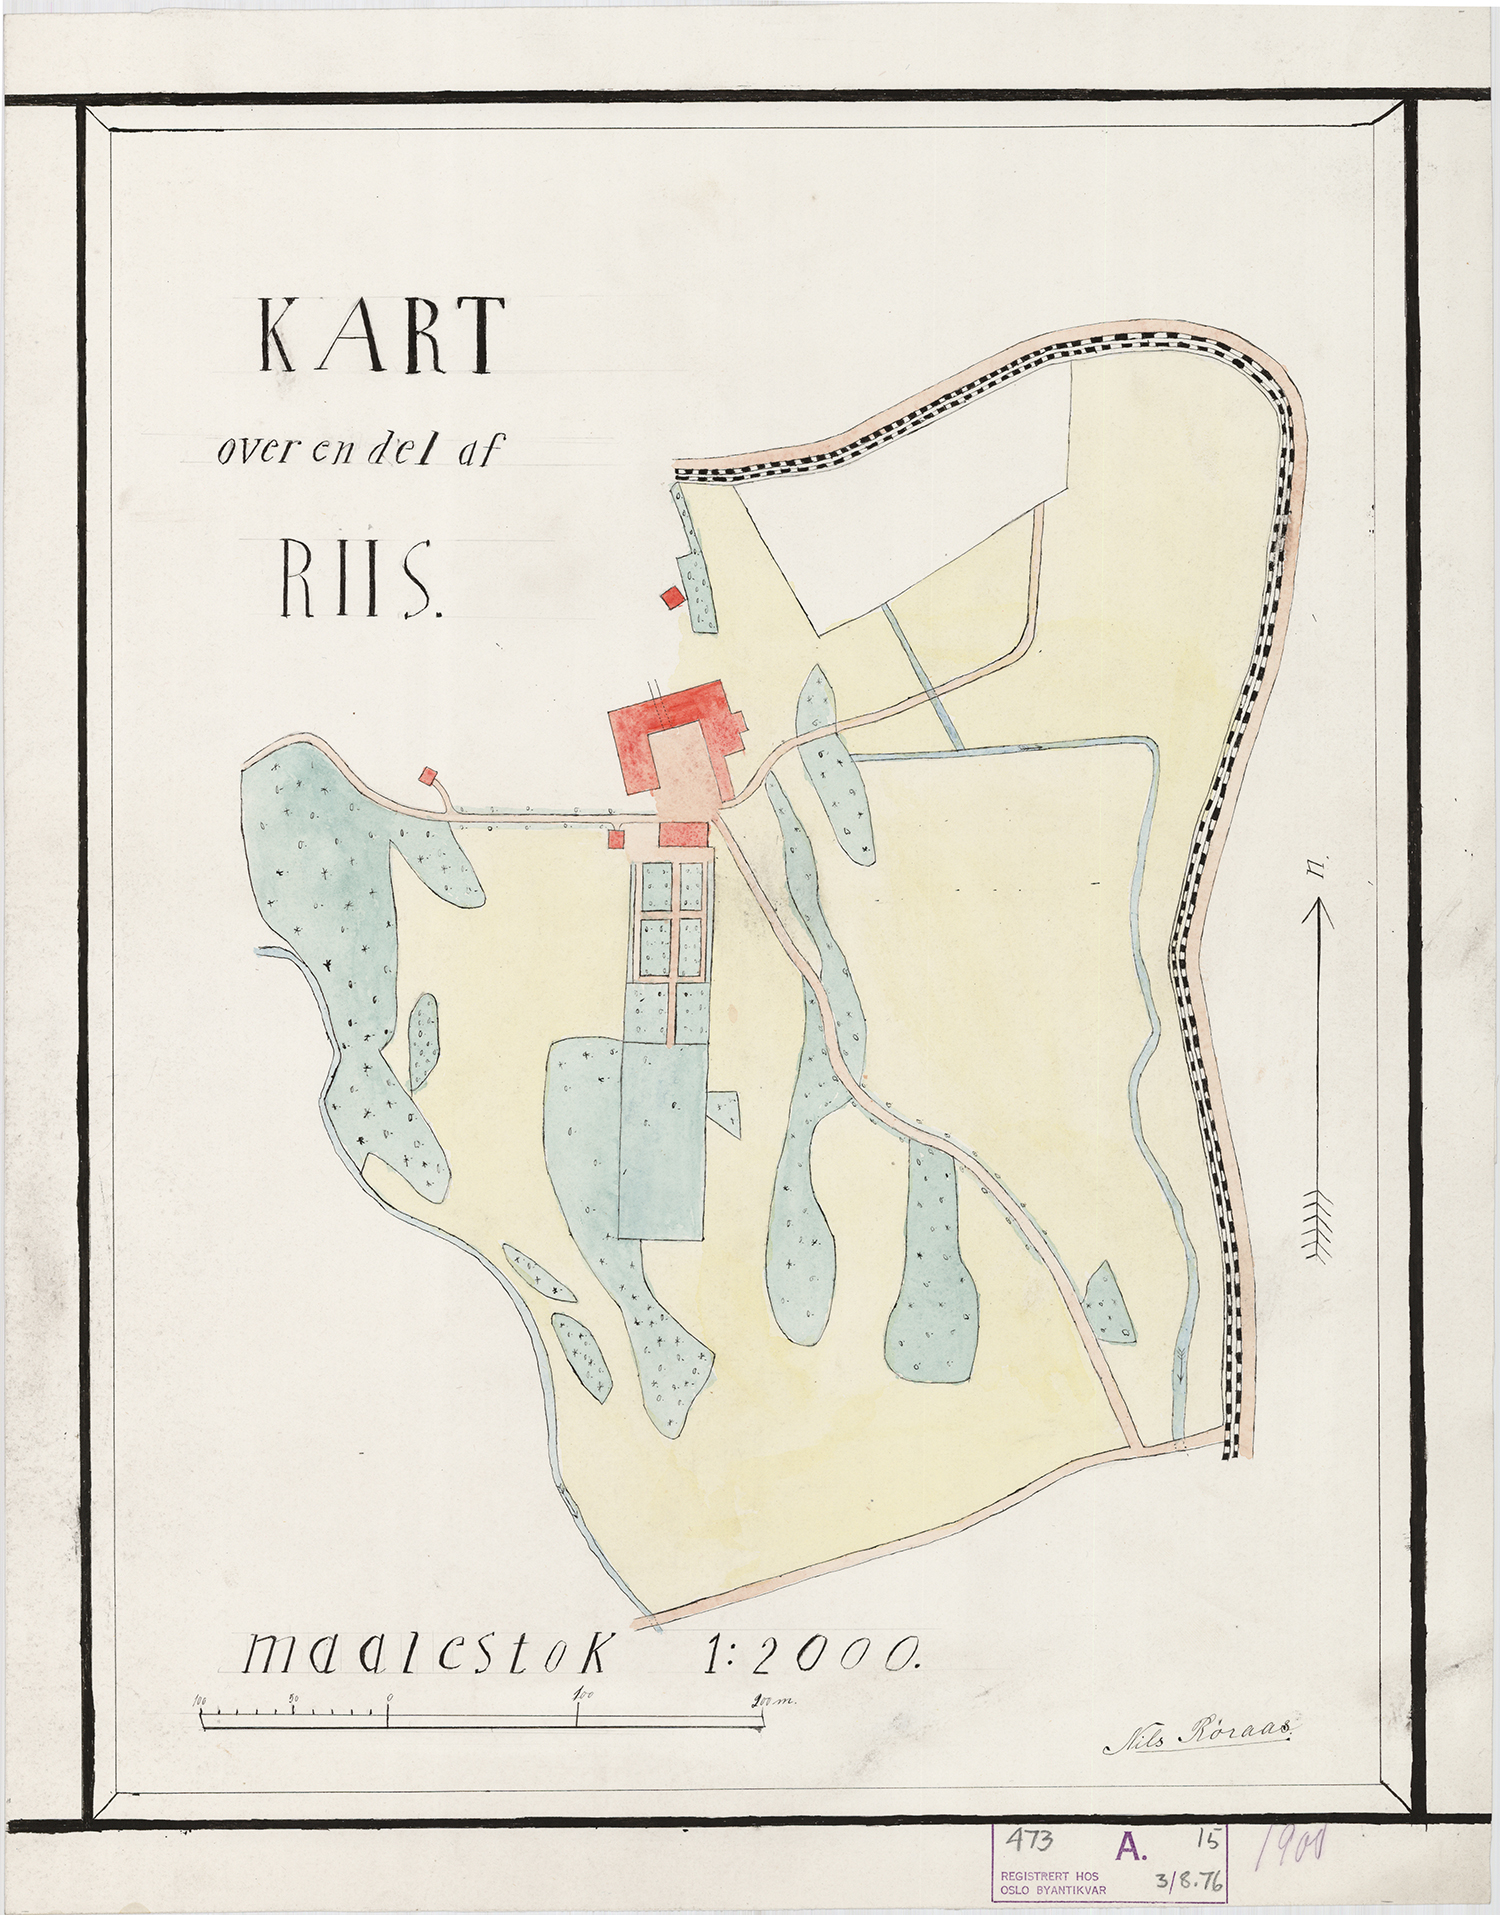 Kart over Ris 1900